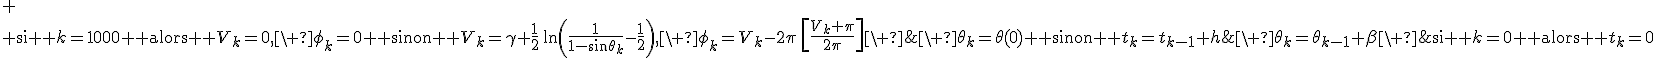 \text{si } k=0 \text{ alors } t_k=0;\ \theta_k=\theta(0) \text{ sinon } t_{k}=t_{k-1}+h;\ \theta_k=\theta_{k-1}+\beta\ ;
 \\ \text{si } k=1000 \text{ alors } V_k=0,\ \phi_k=0 \text{ sinon } V_k=\gamma+\frac{1}{2}\,\ln\left(\frac{1}{1-\sin\theta_k}-\frac{1}{2}\right),\ \phi_k=V_k-2\pi\,\left[\frac{V_k+\pi}{2\pi}\right]\ ;